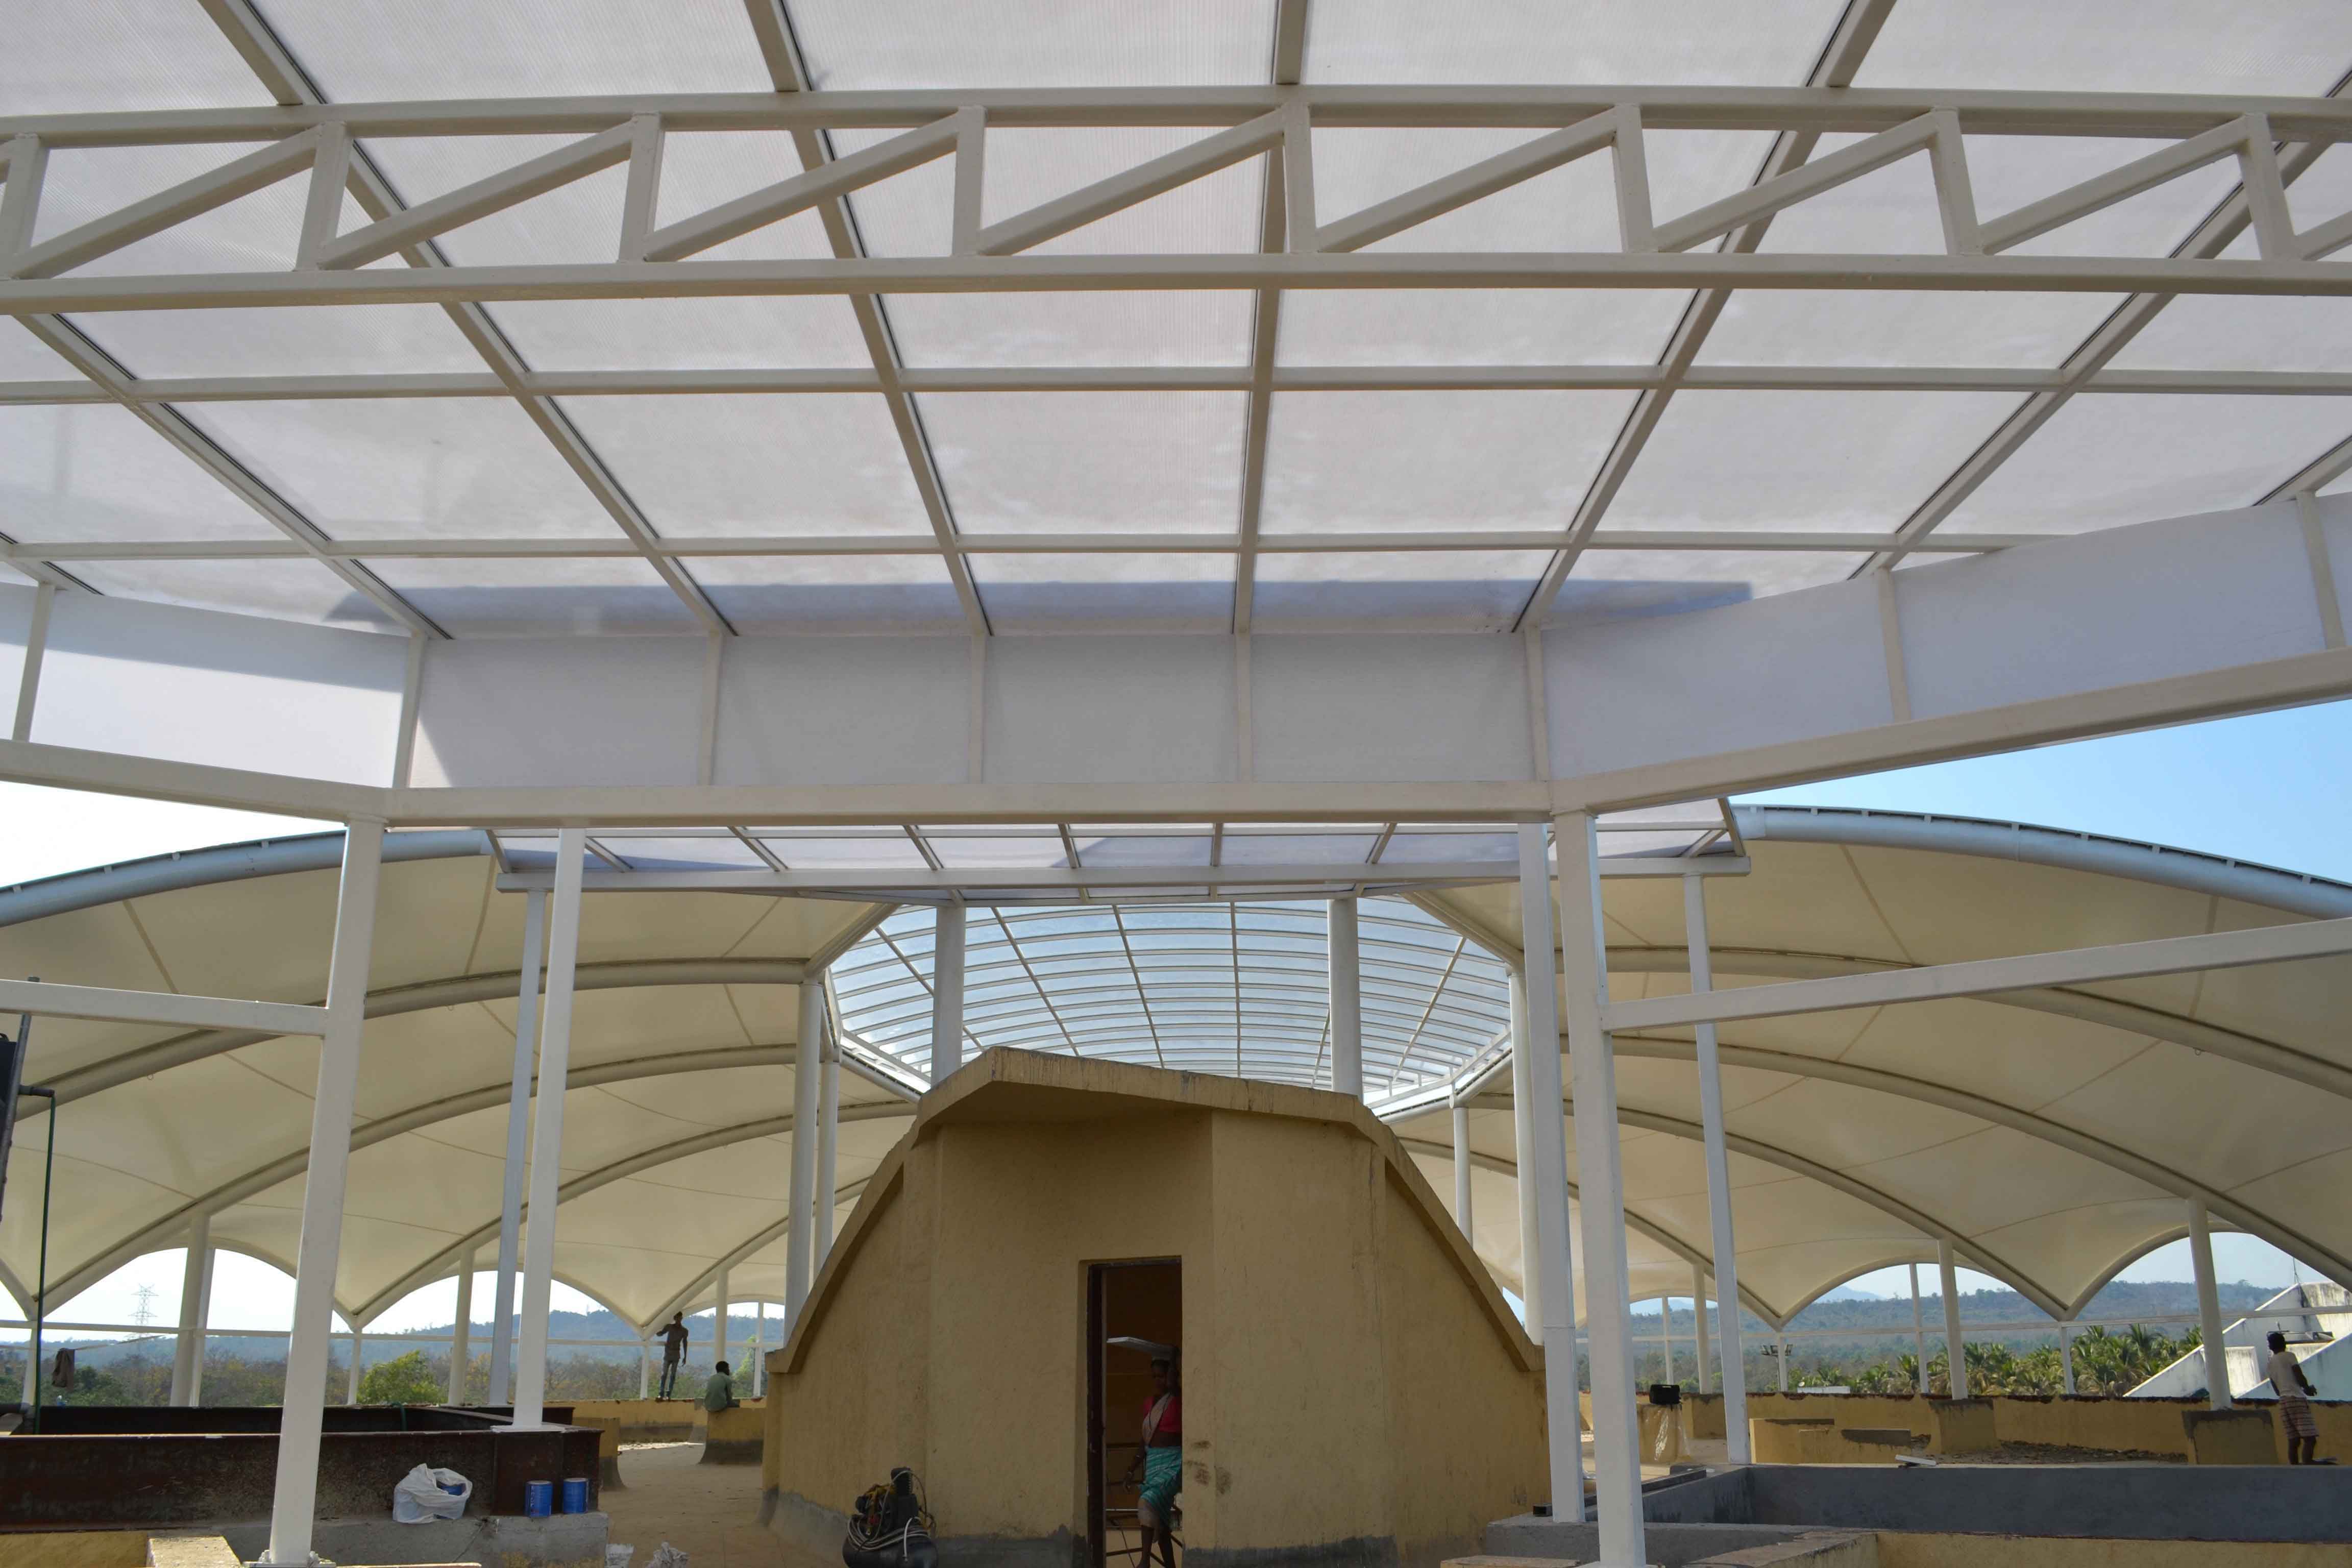 ravera international school roof shade fabric structure in palghar, thane, maharashtra, india